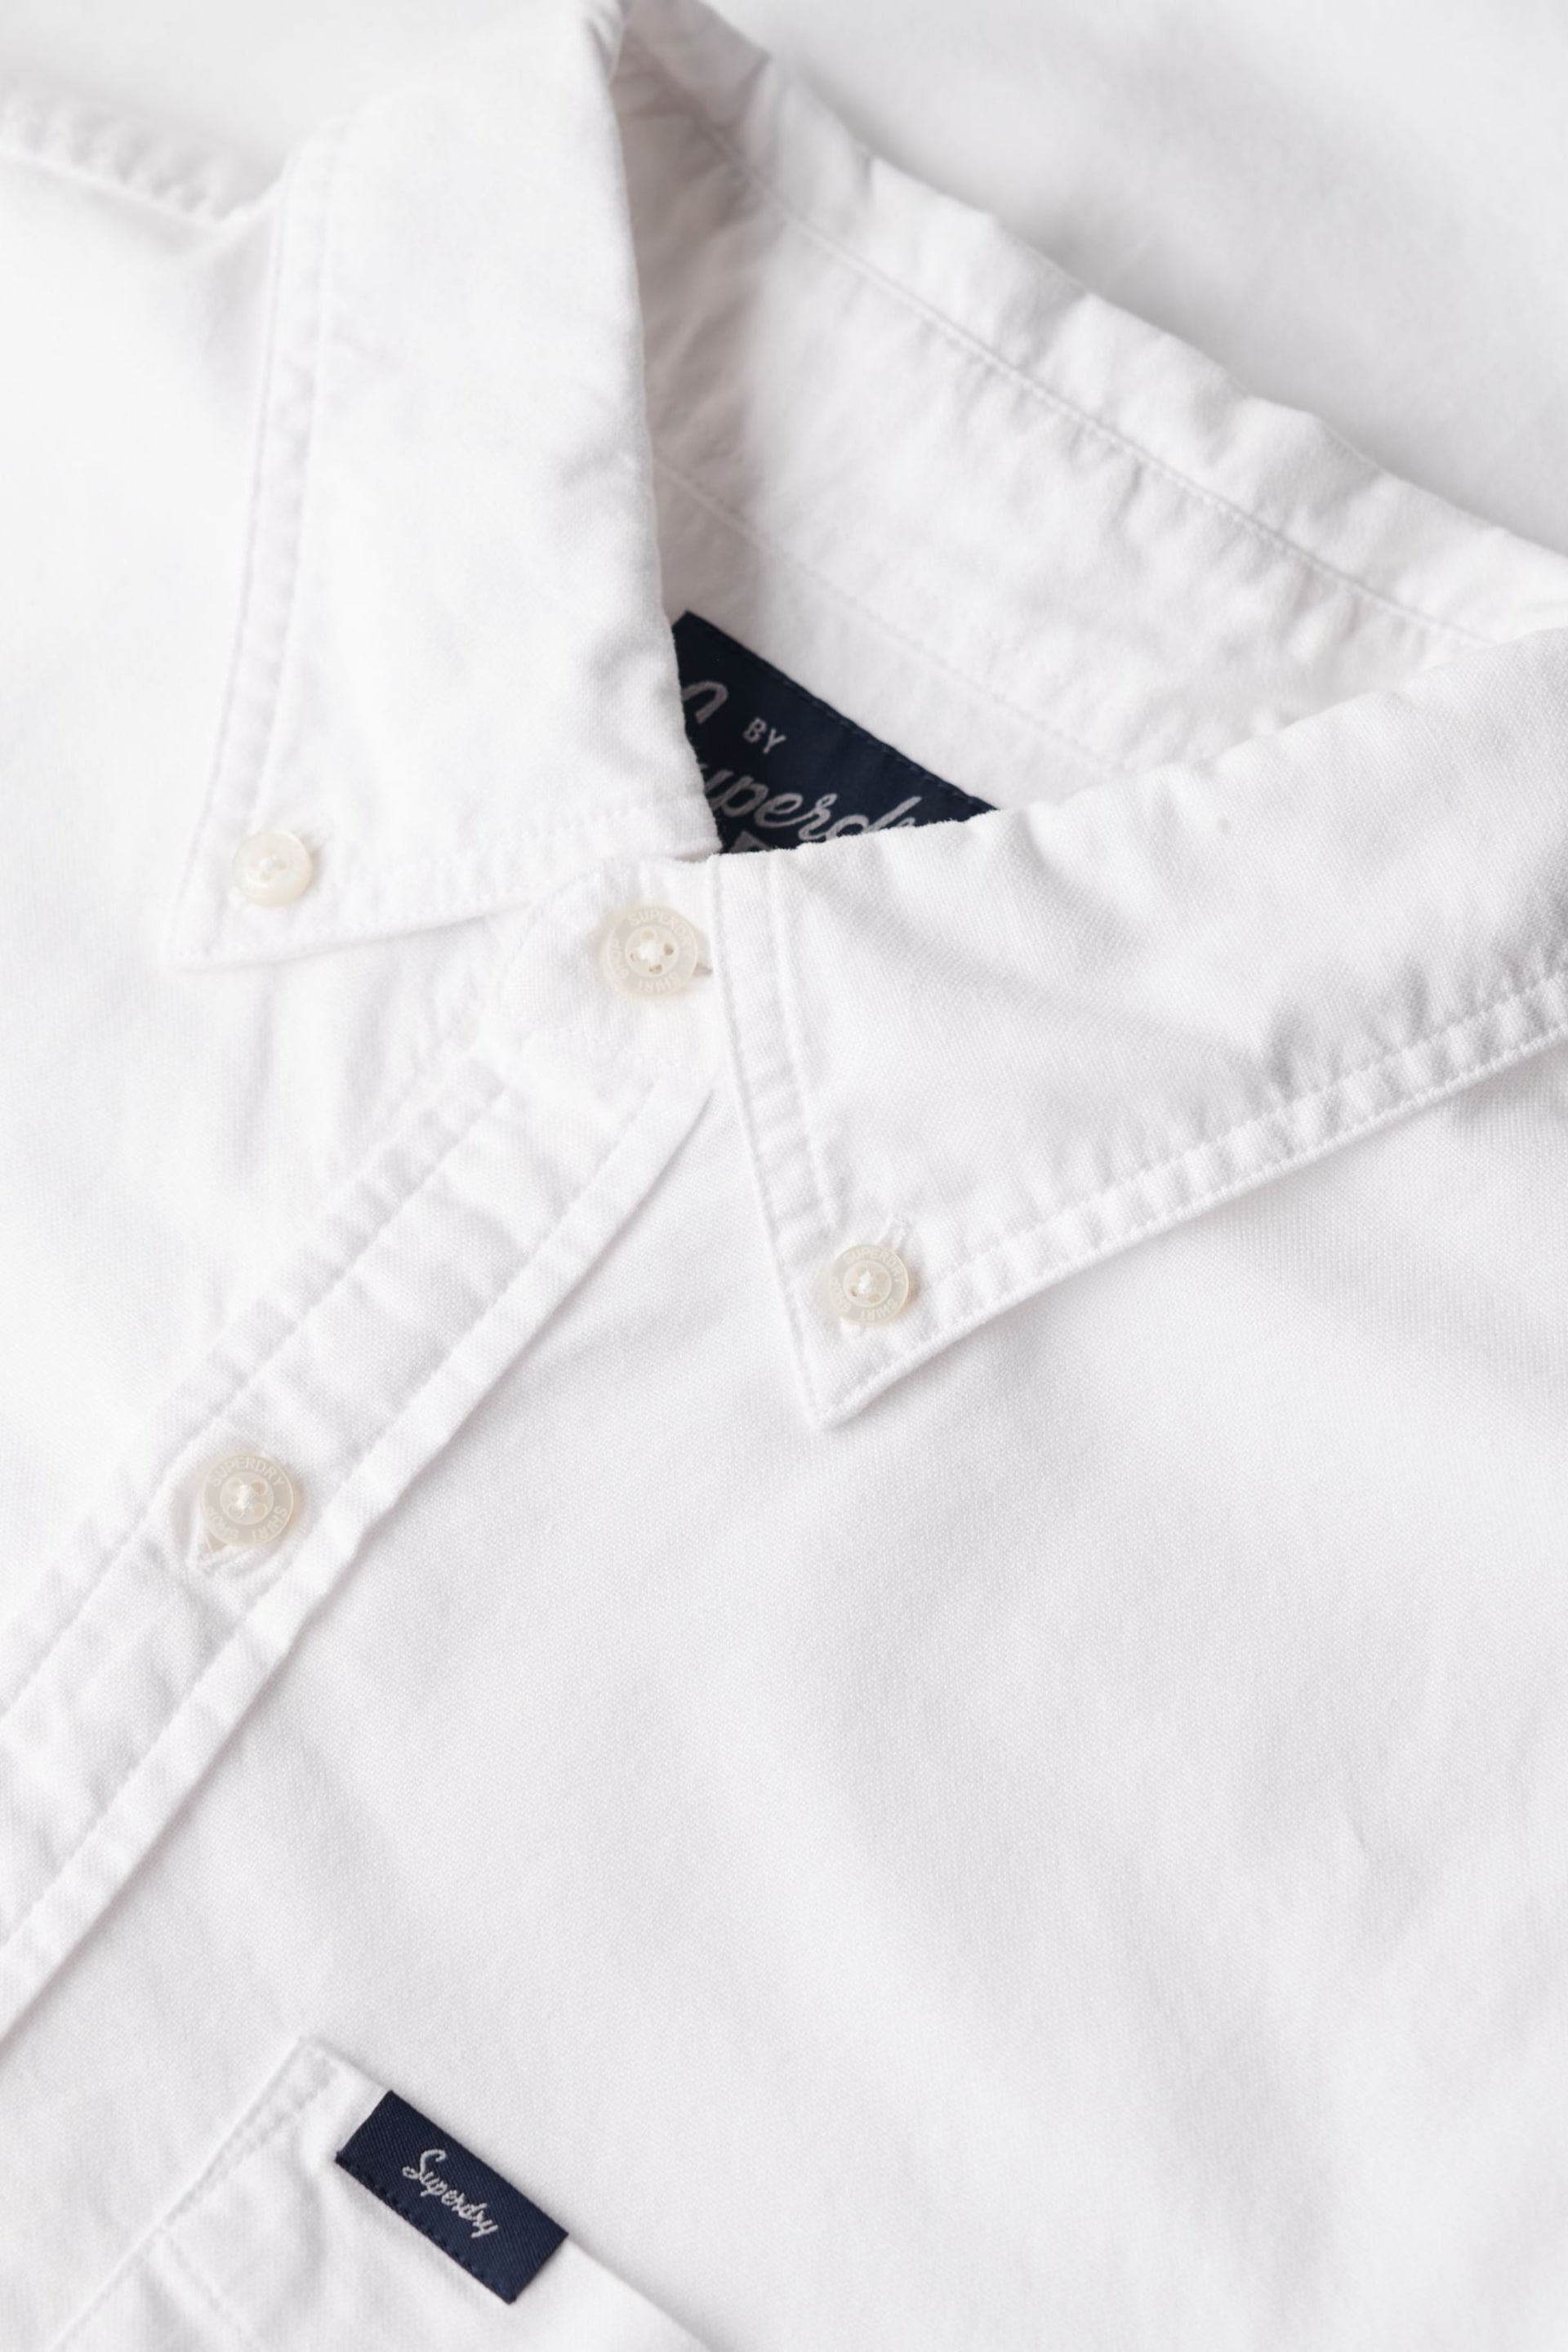 Superdry White Vintage Oxford Short Sleeve Shirt - Image 4 of 6